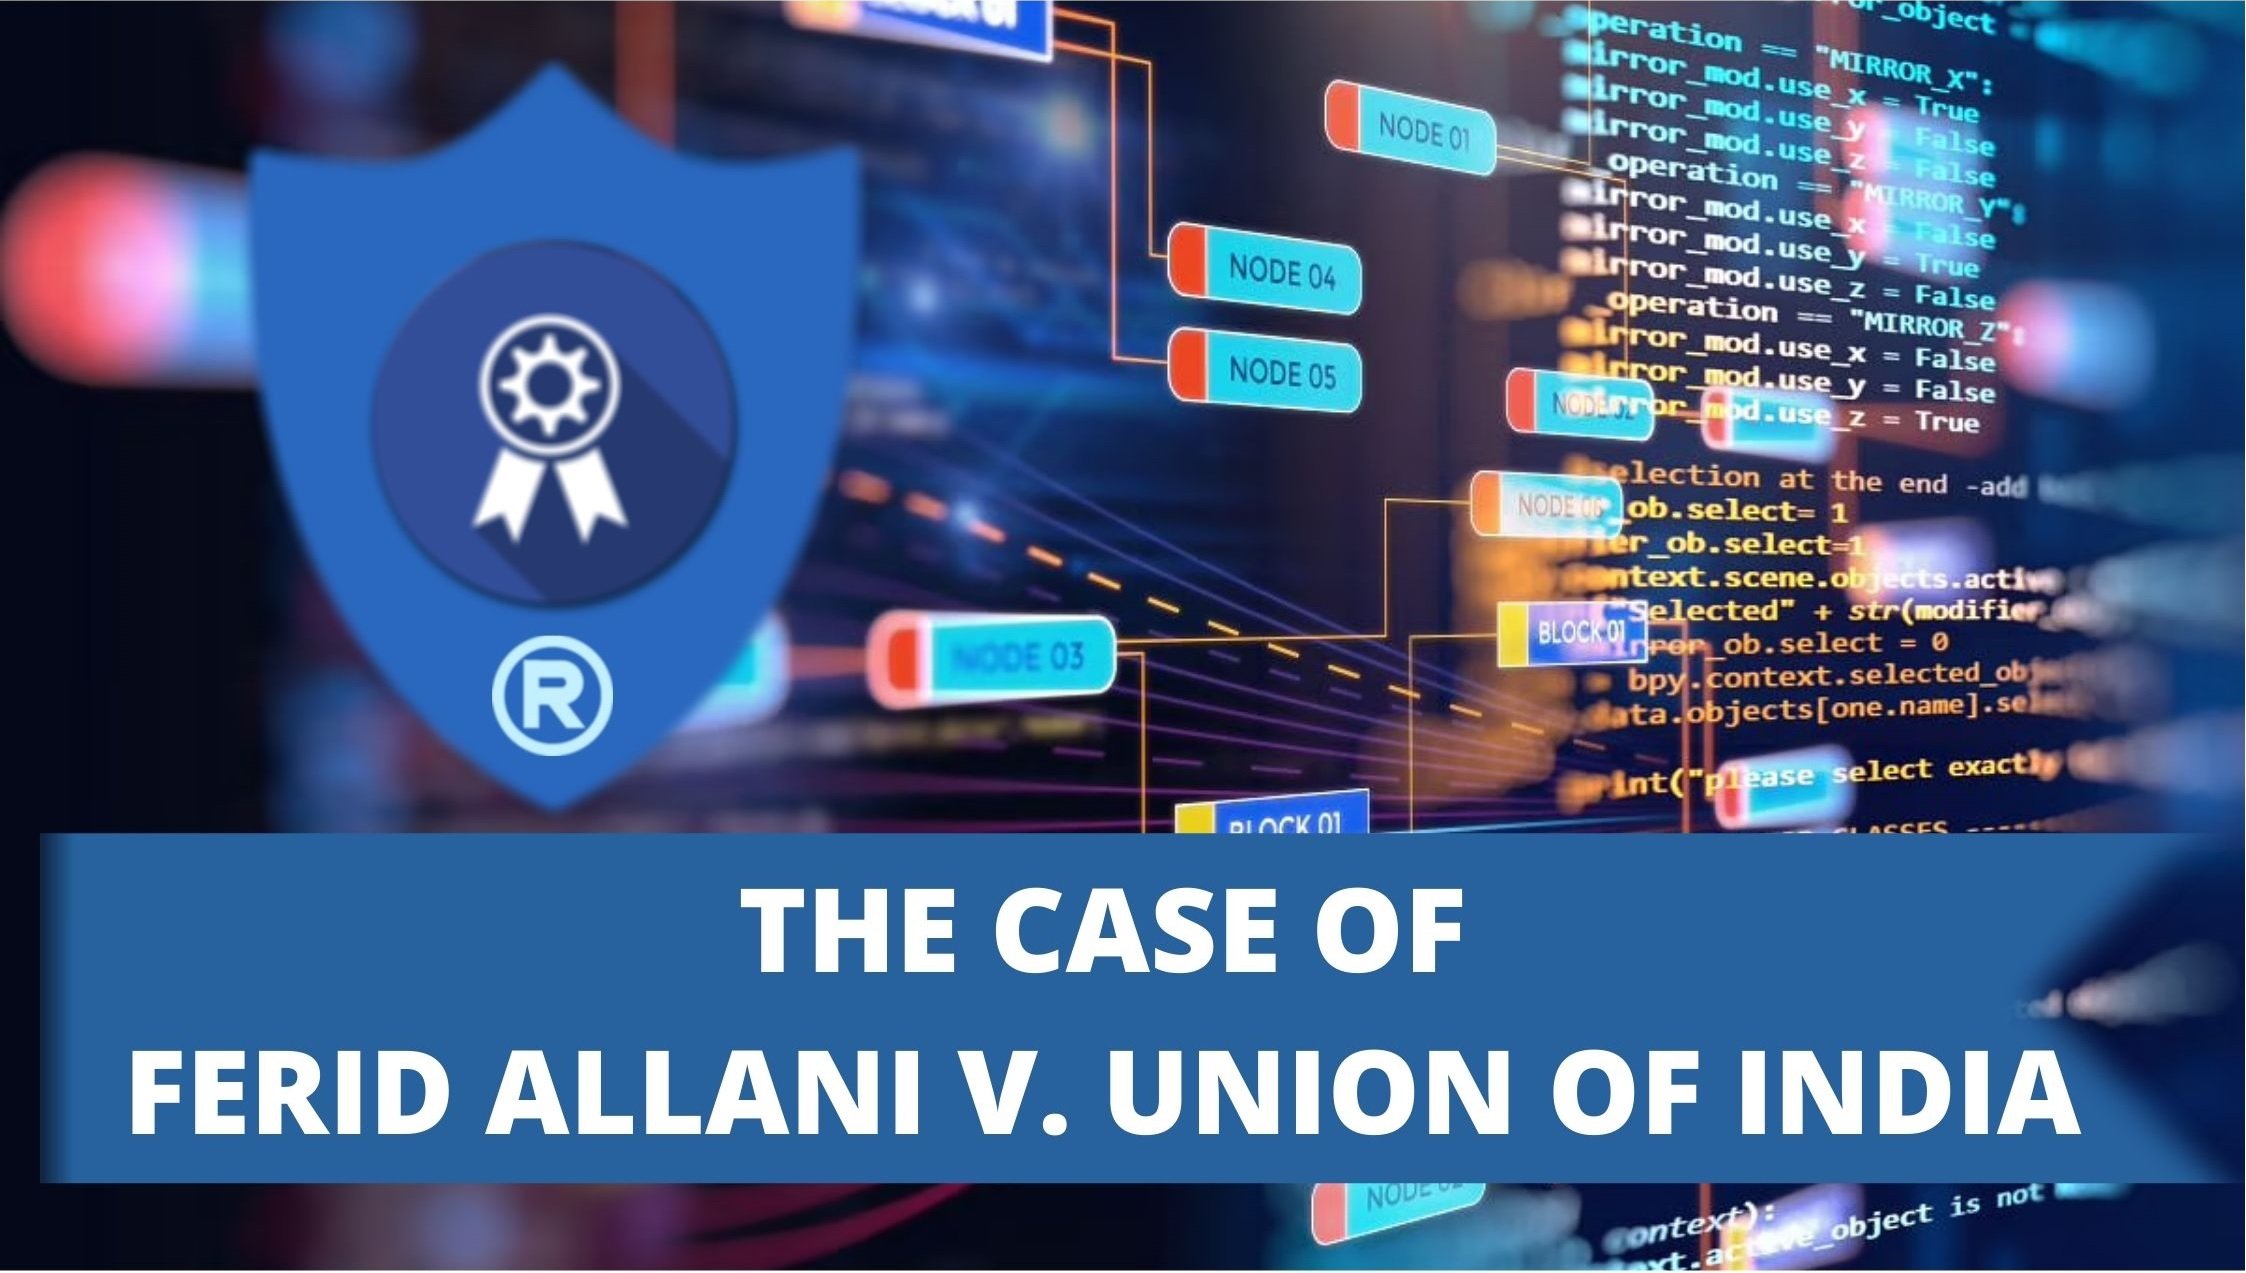 THE CASE OF FERID ALLANI V. UNION OF INDIA